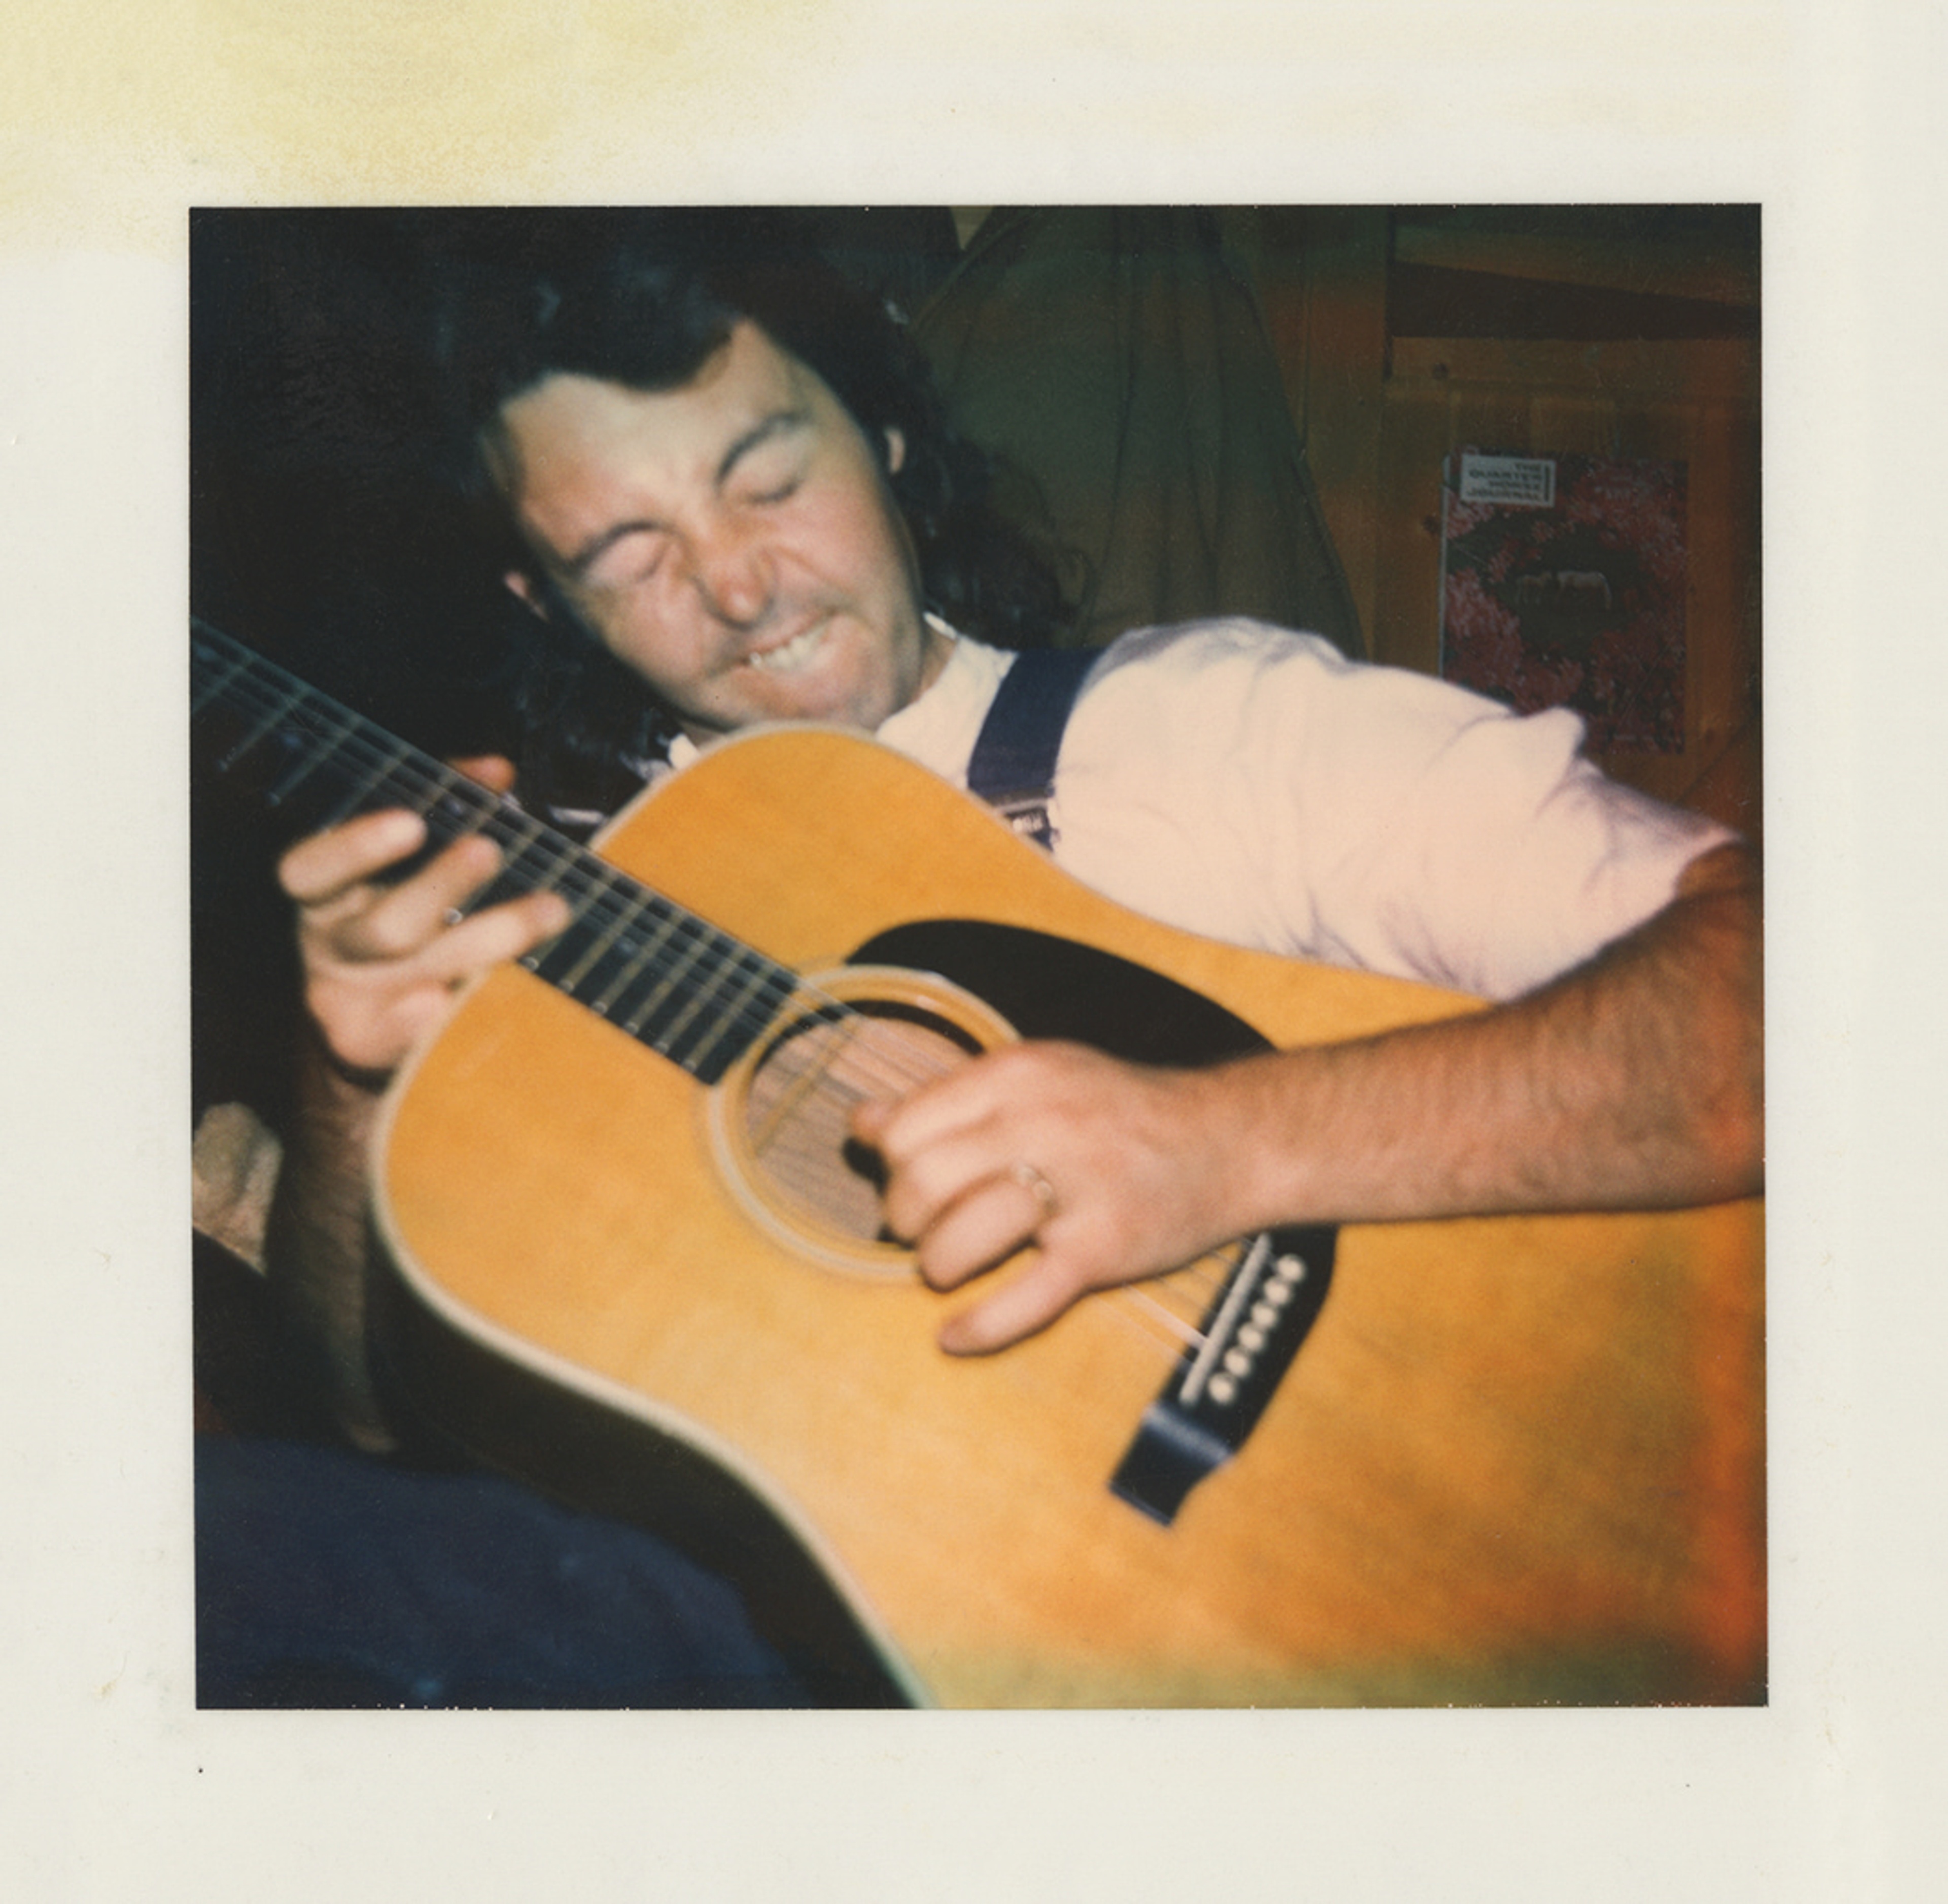 Polaroid Photo Of Paul McCartney playing guitar